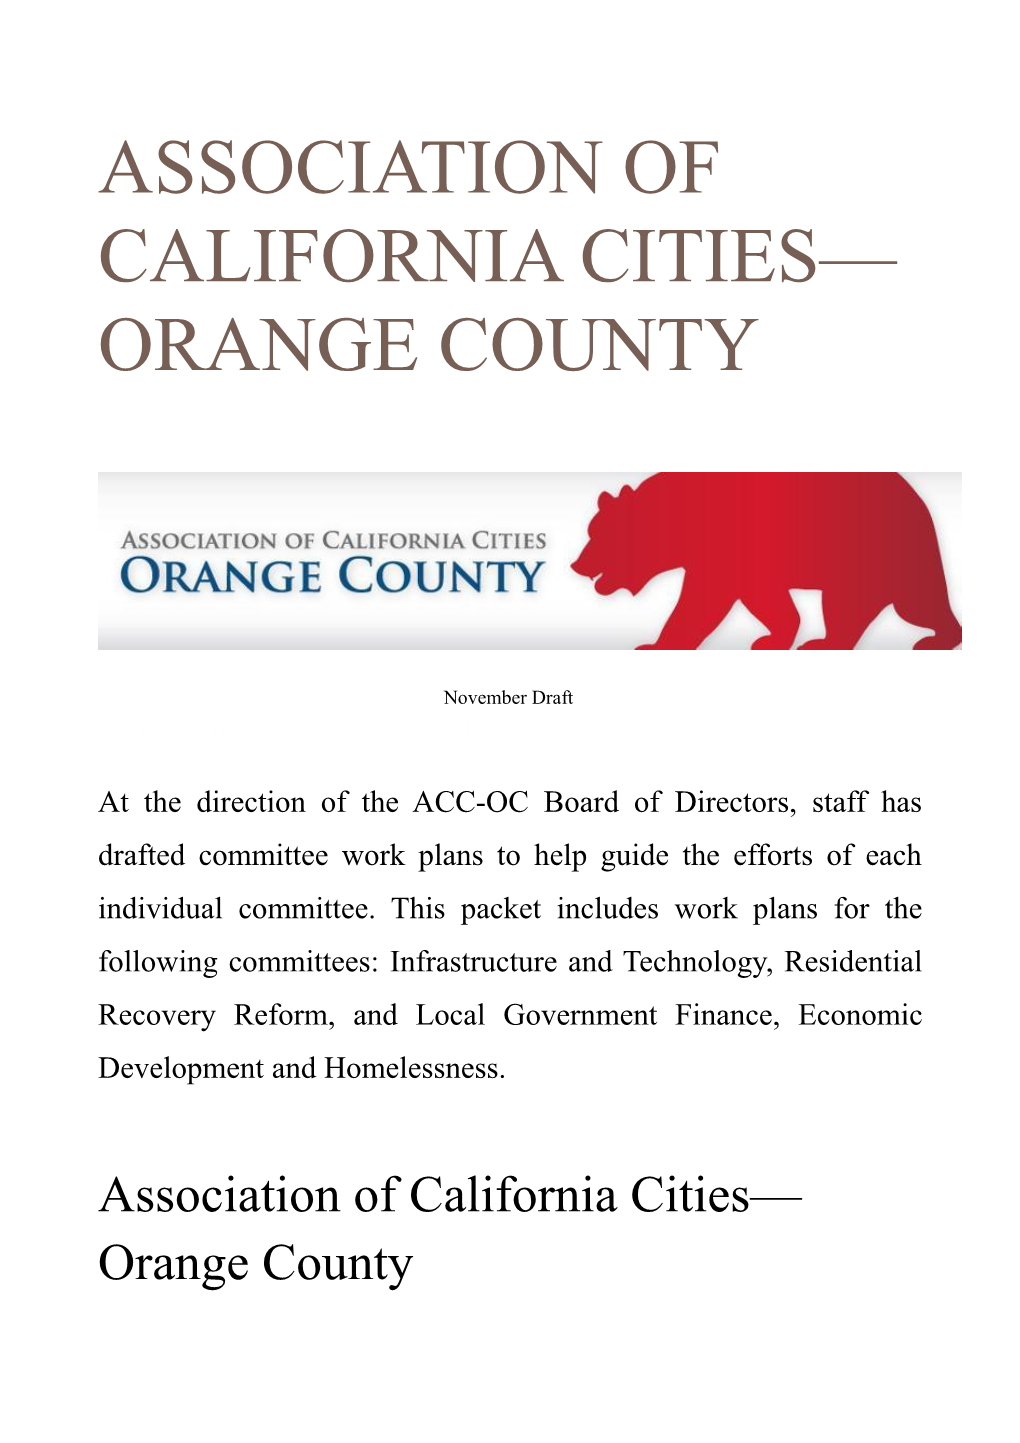 Association of California Cities Orange County